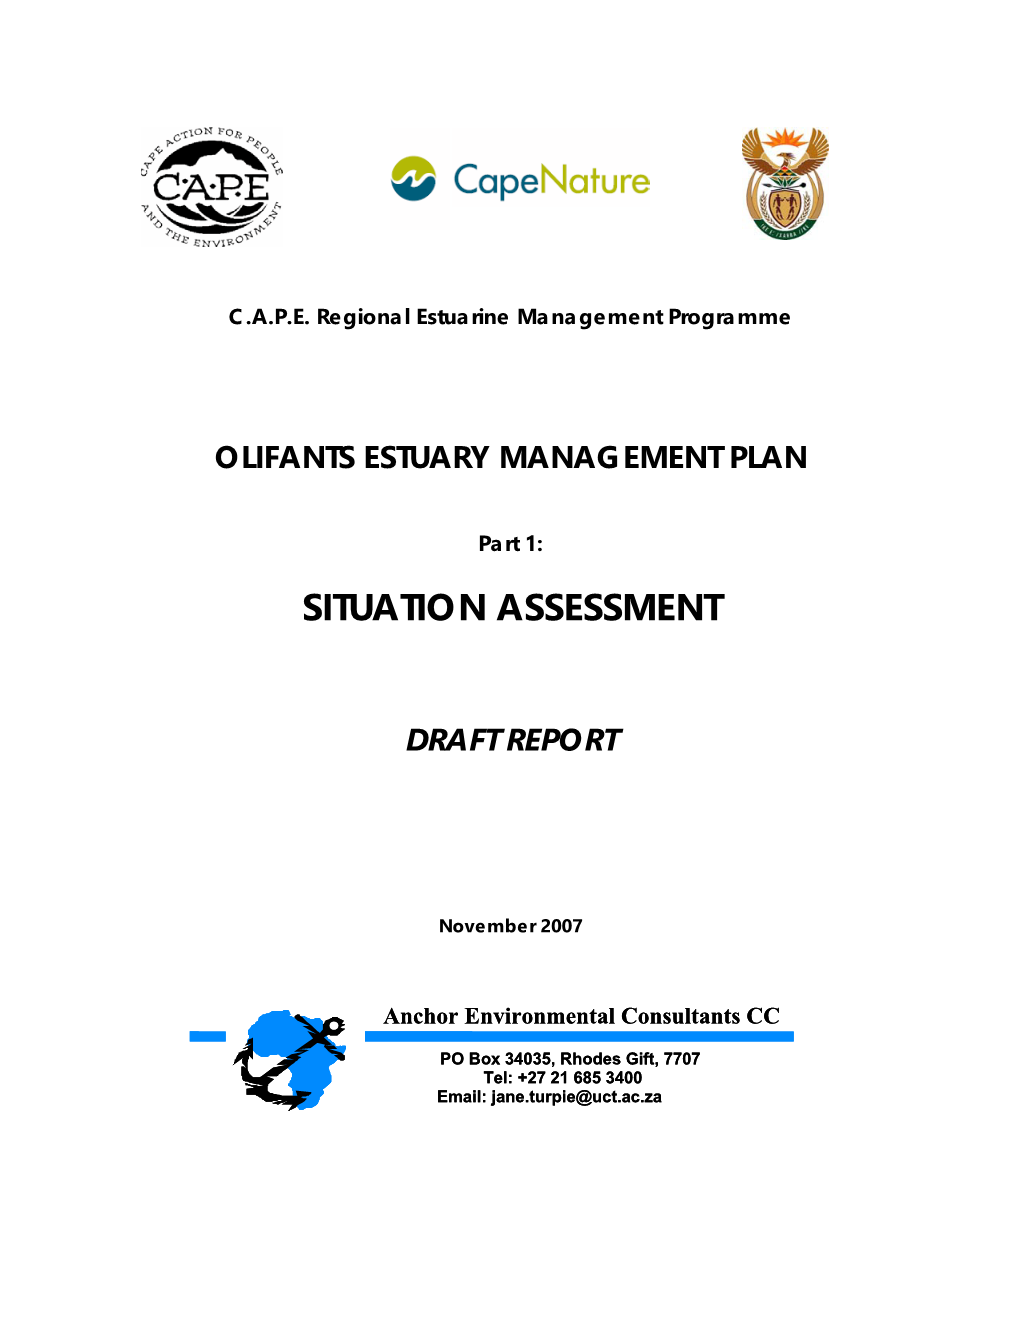 Olifants Estuary Management Plan